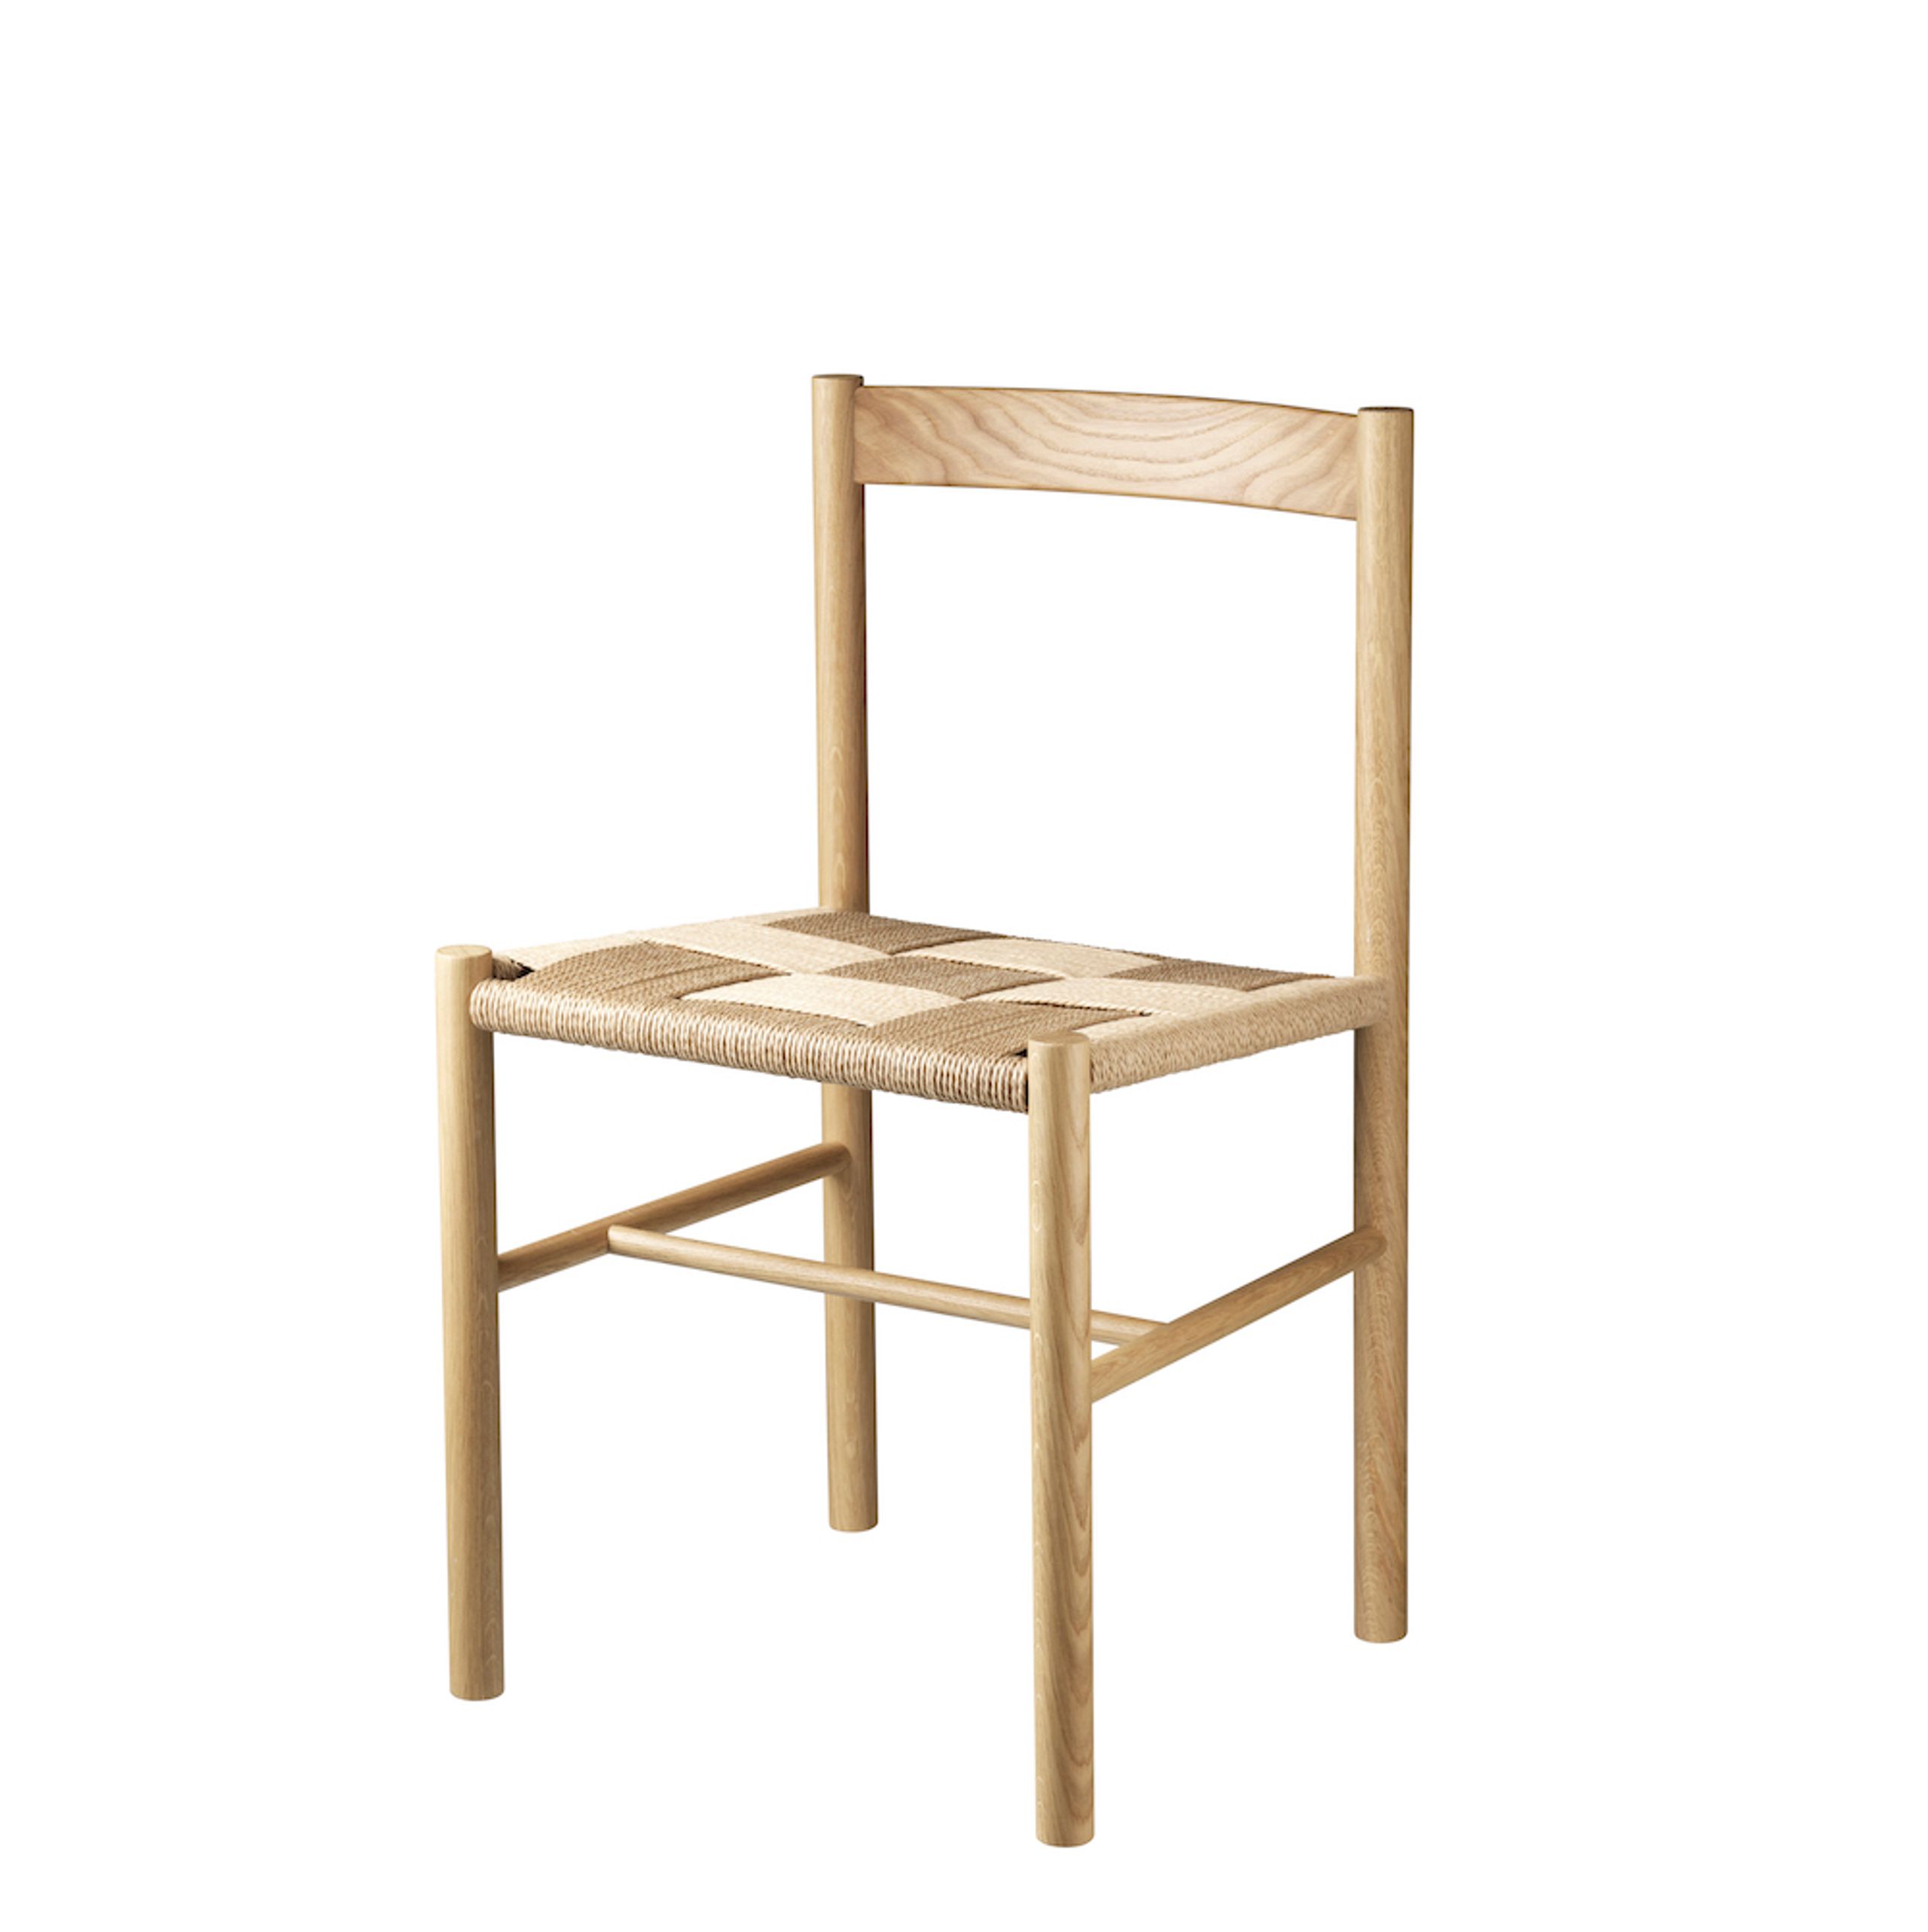 FDB Møbler / Furniture - Esstischstuhl - J178 Chair - Oak / Handwoven paper seat